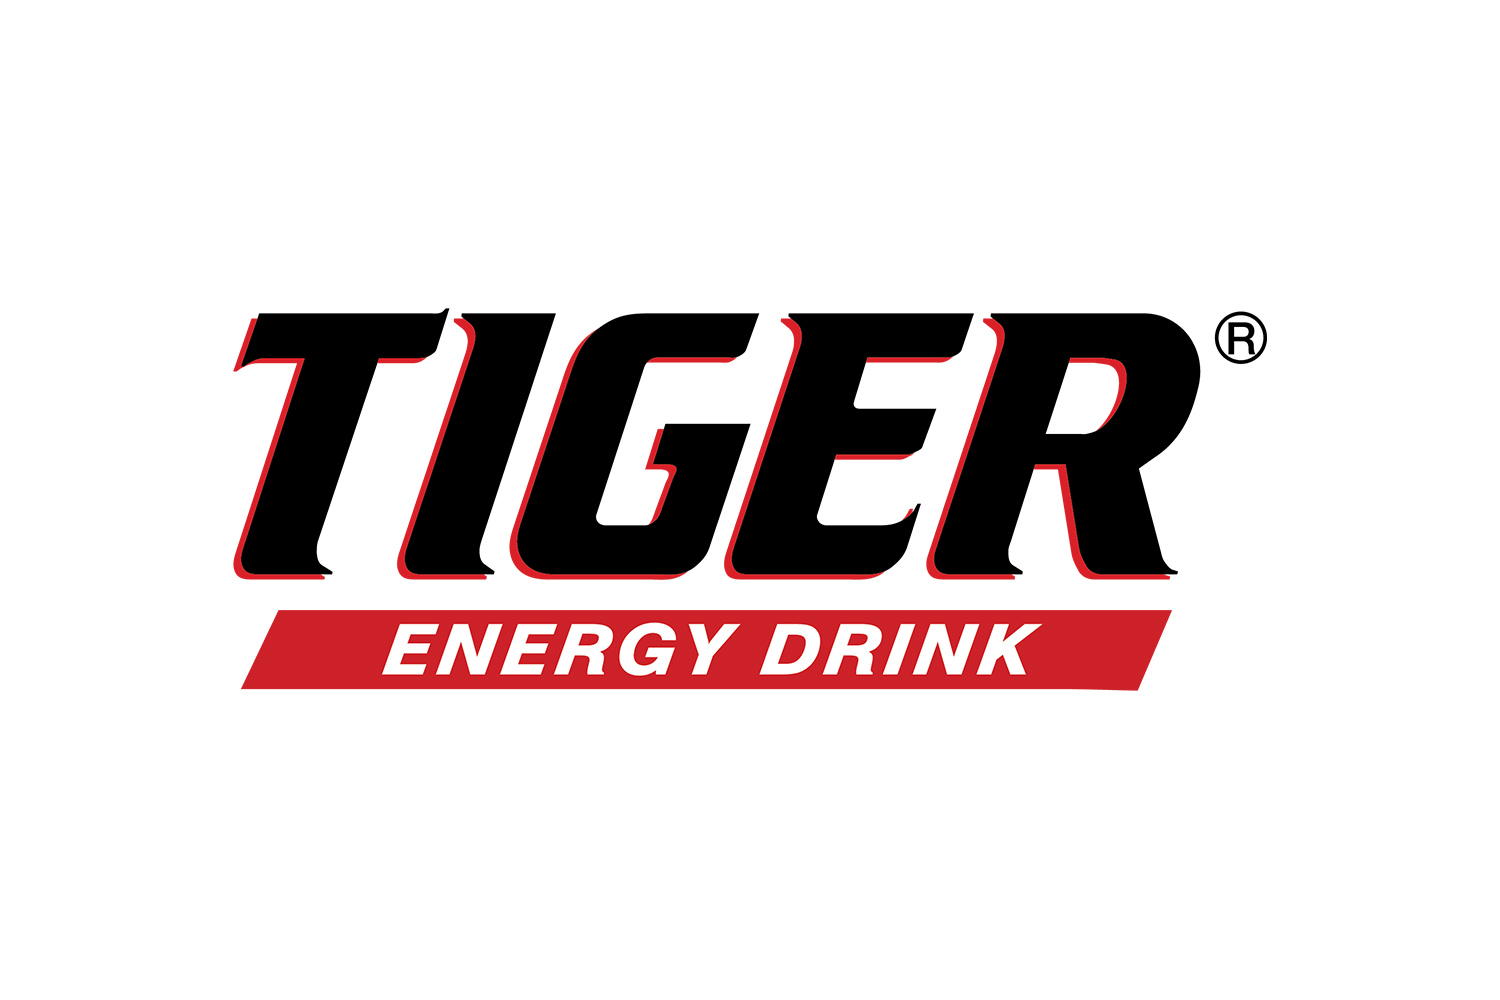 Tigerenergy basic